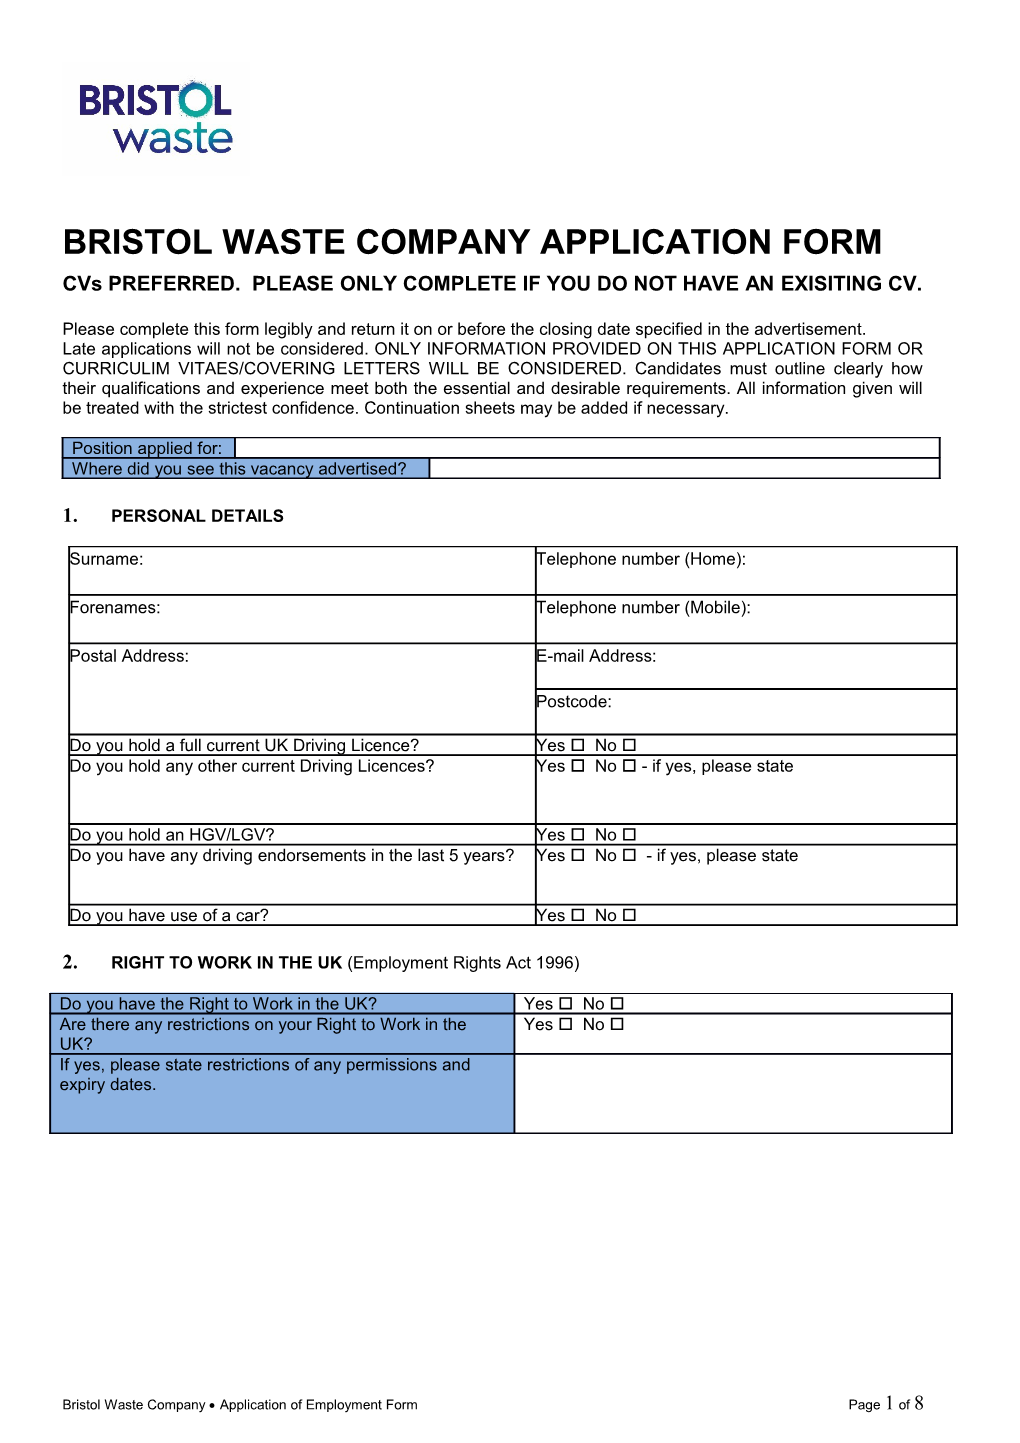 Bristol Waste Company Application Form